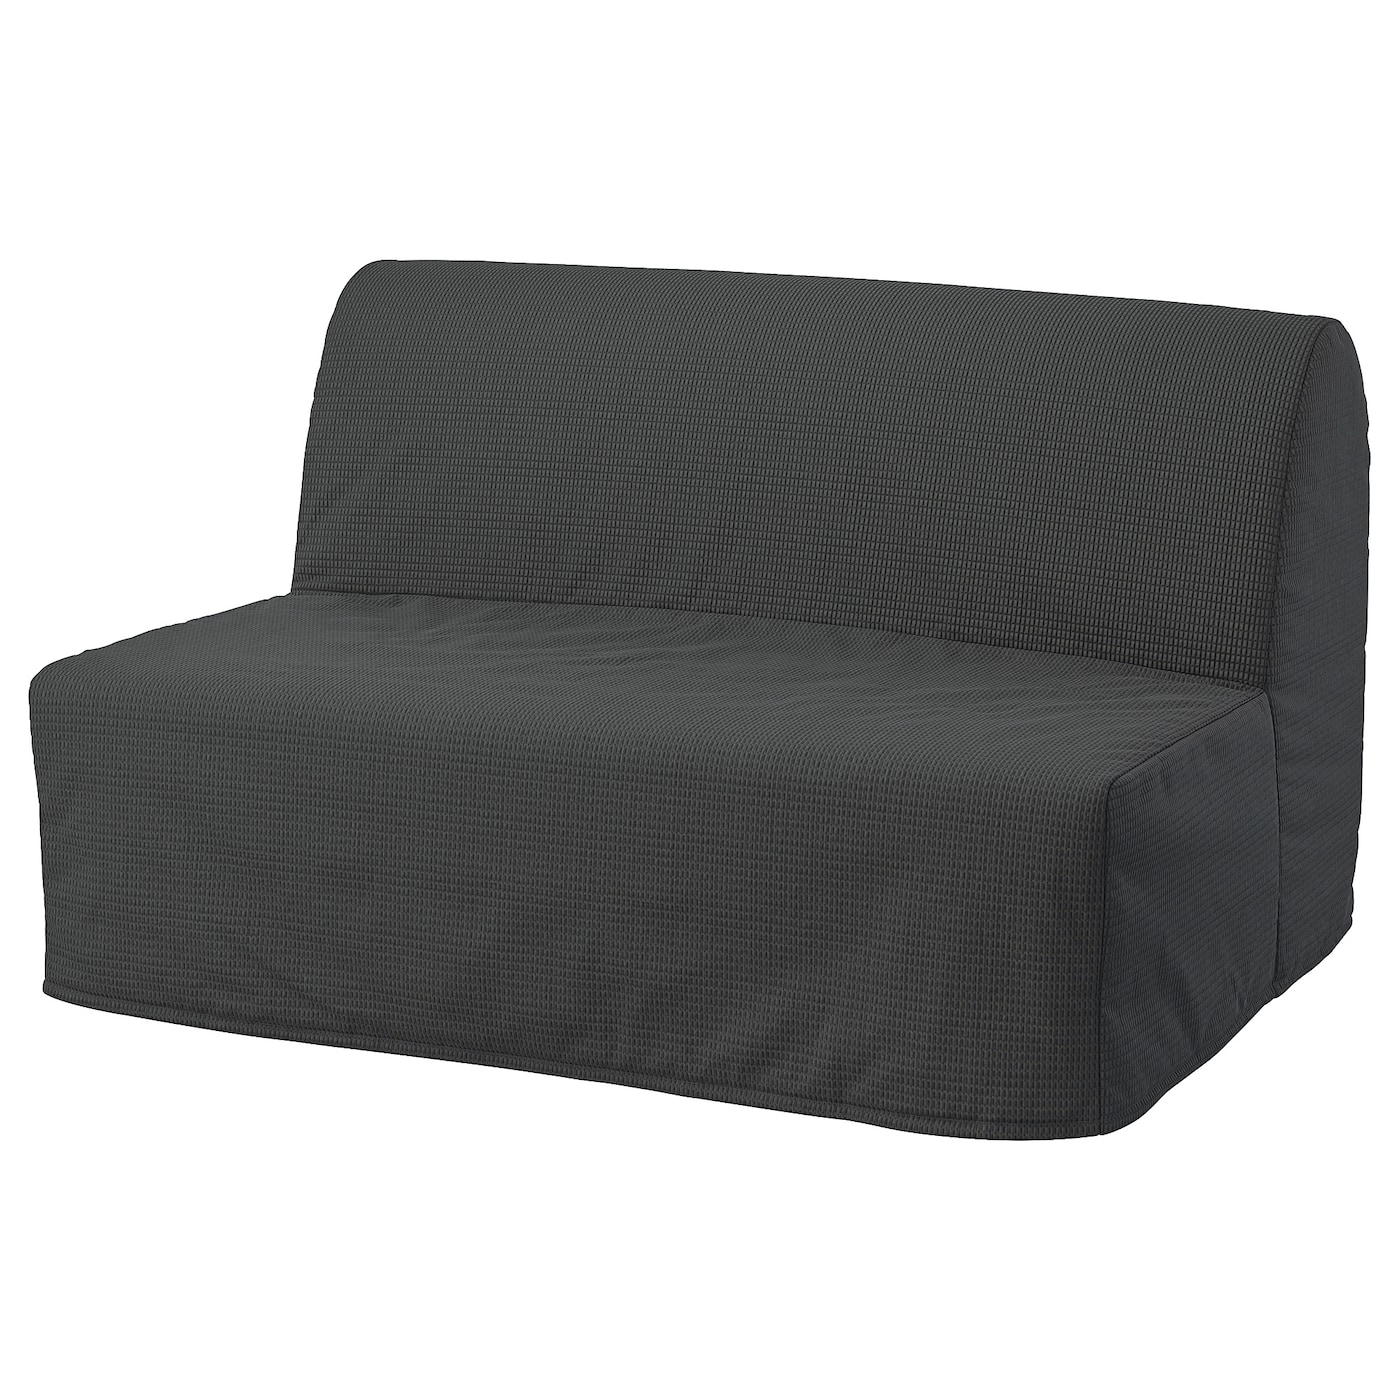 ЛИКСЕЛЕ ЛЕВОС 2 дивана-кровати с откидной спинкой, Вансбро темно-серый LYCKSELE LÖVÅS IKEA